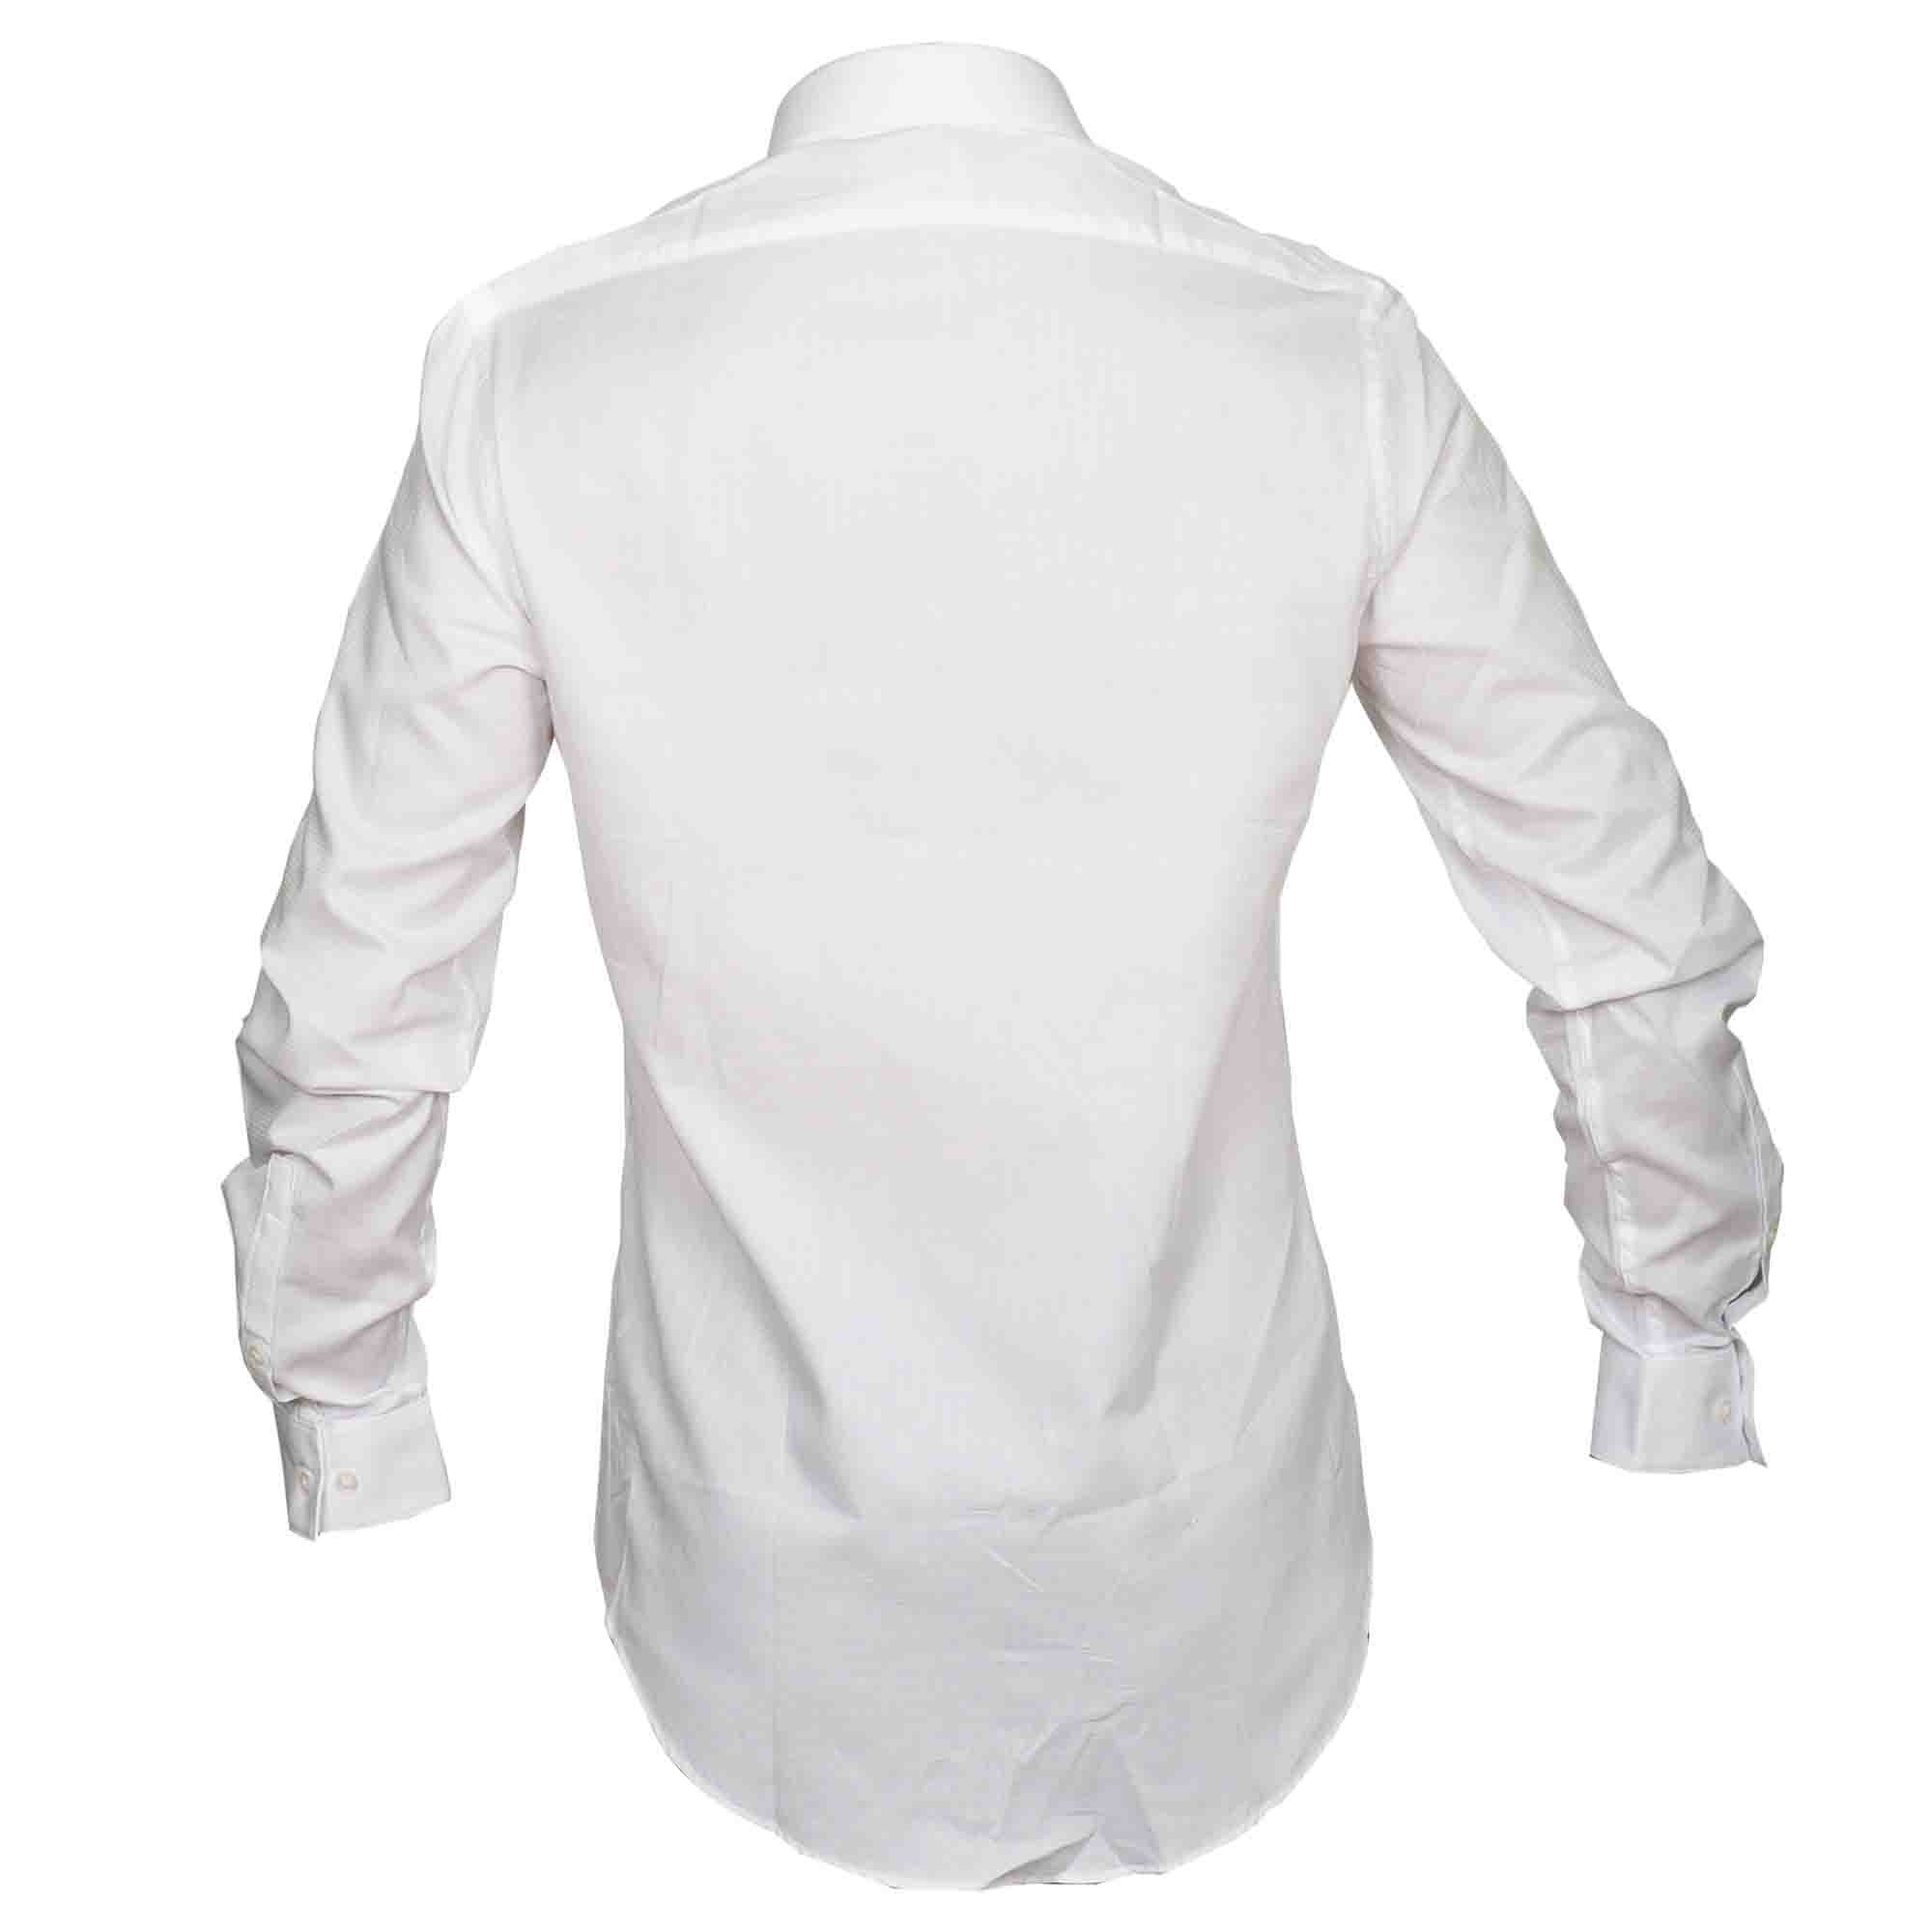 Camisa de Vestir Blanca Manhattan para Caballero